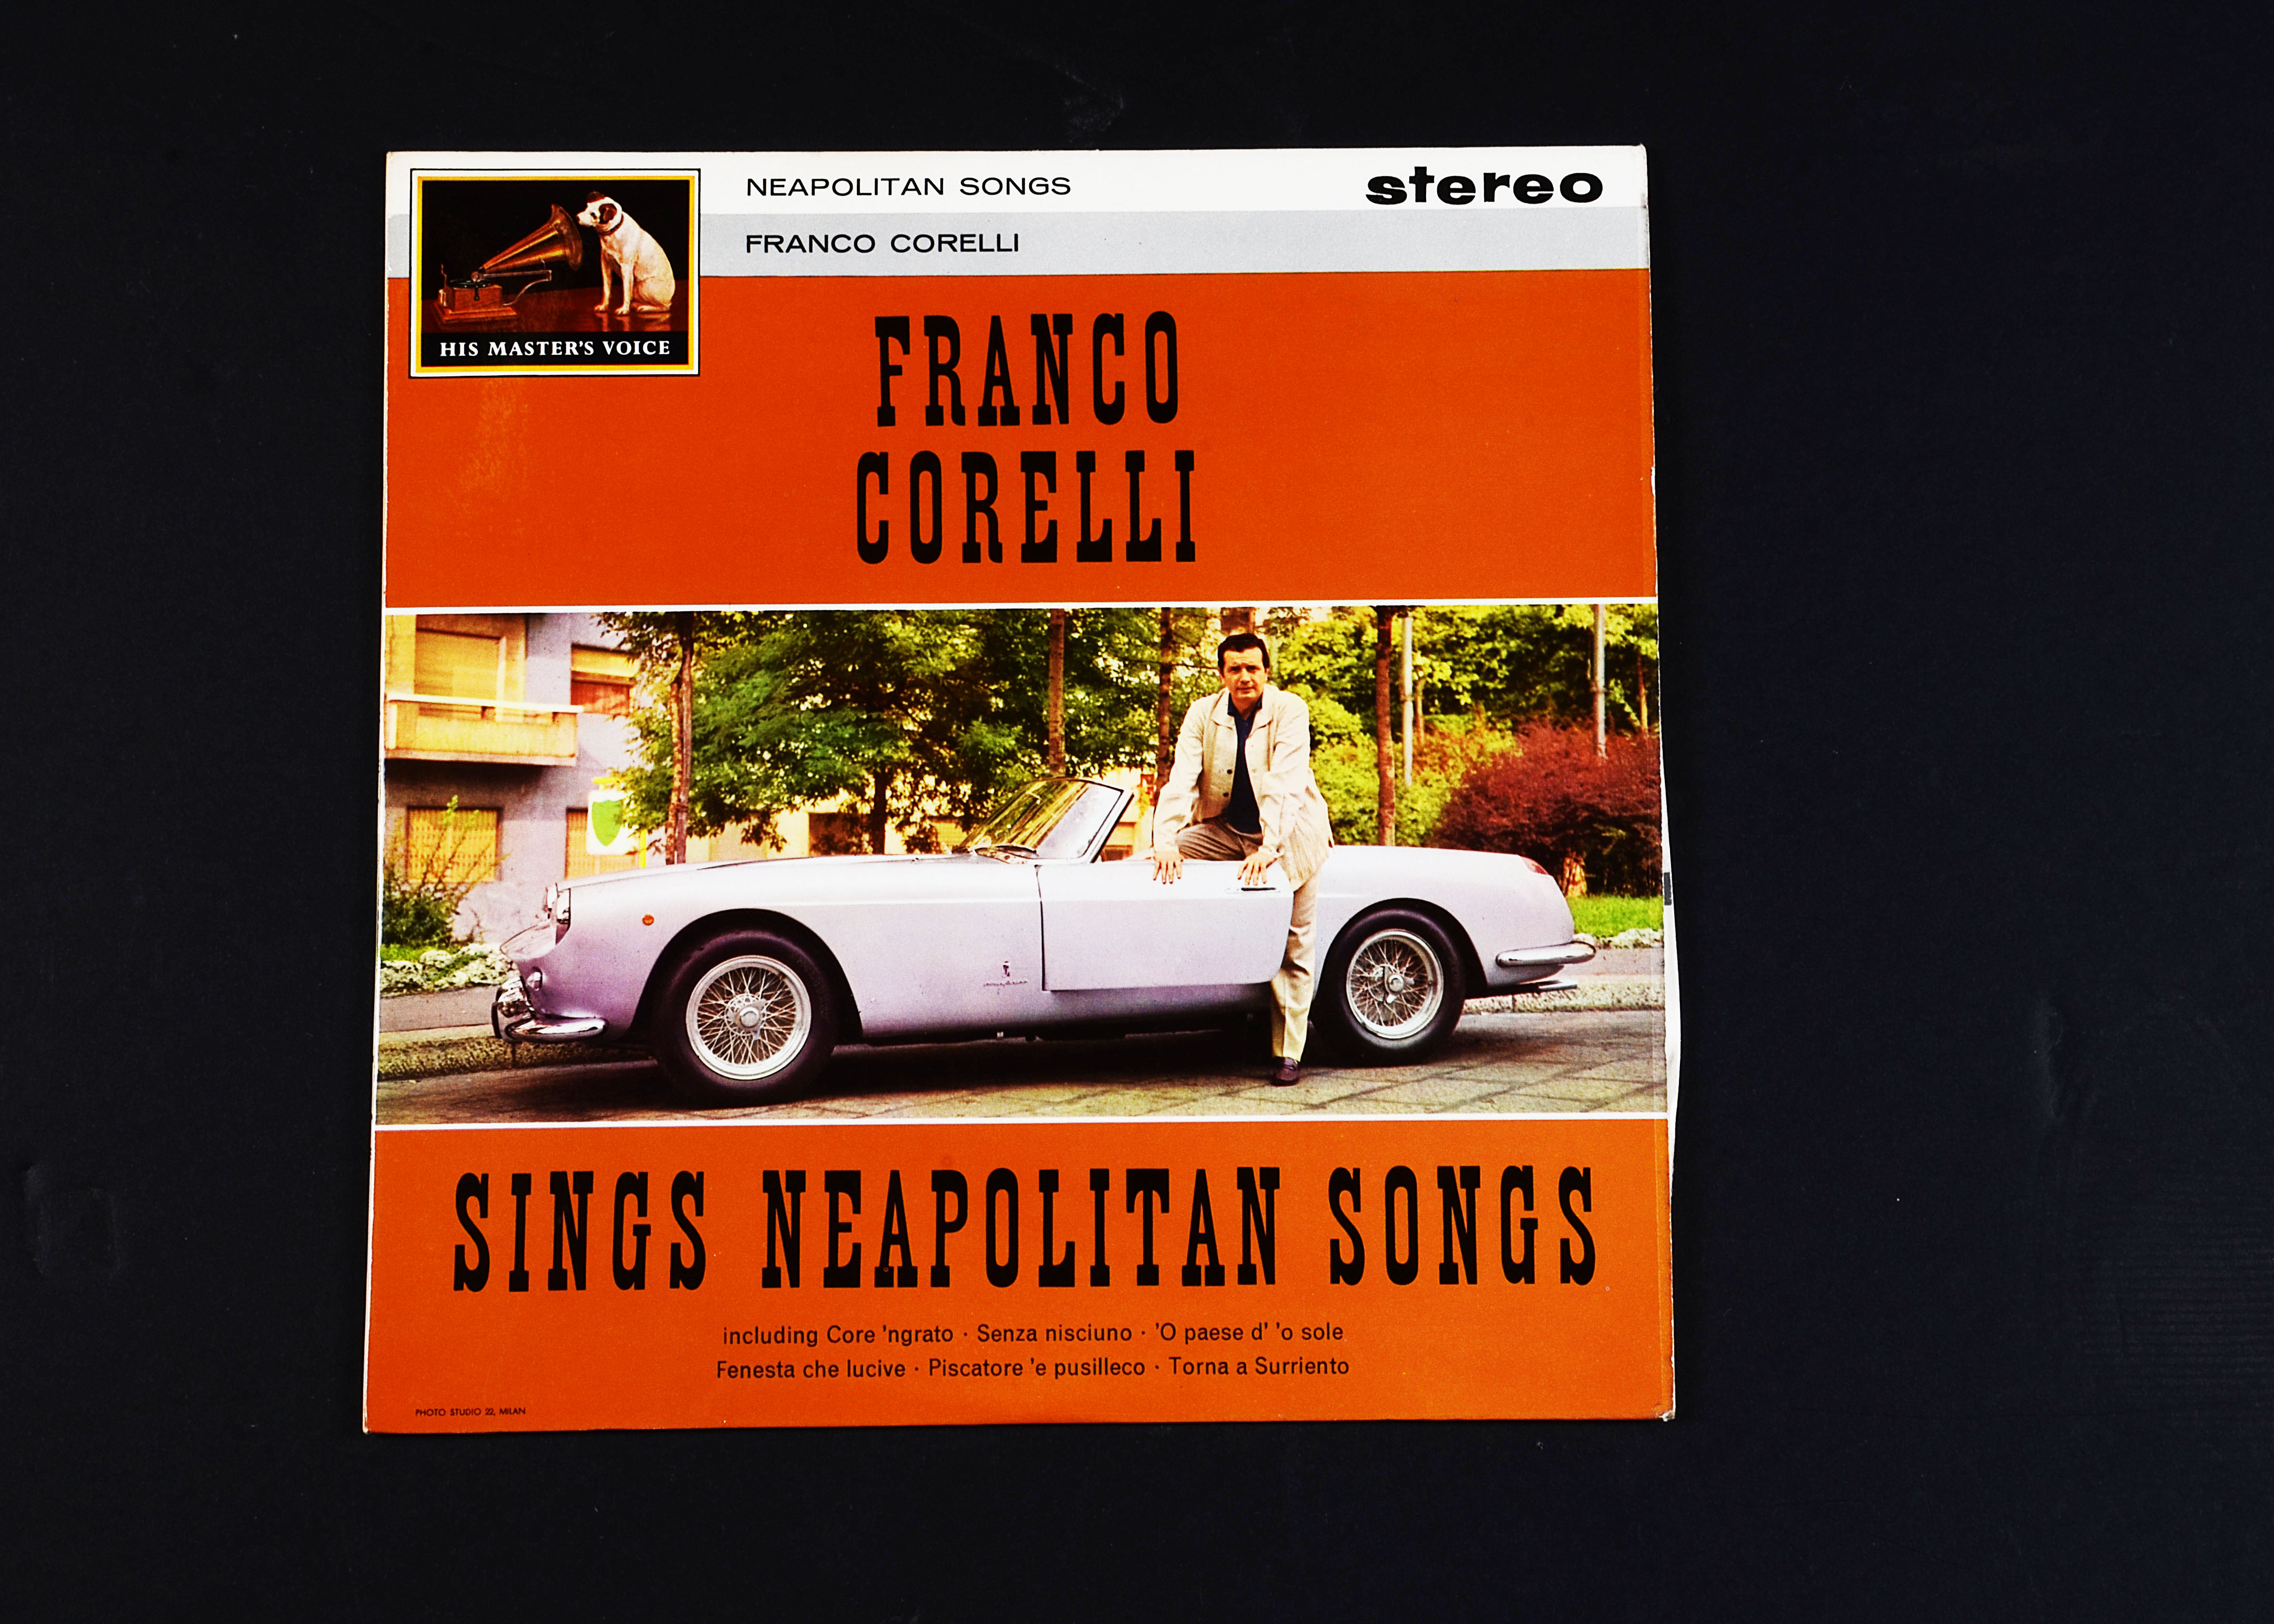 Franco Corelli, ASD 488 - Neapolitan Songs - First Press Stereo Album on HMV - excellent condition